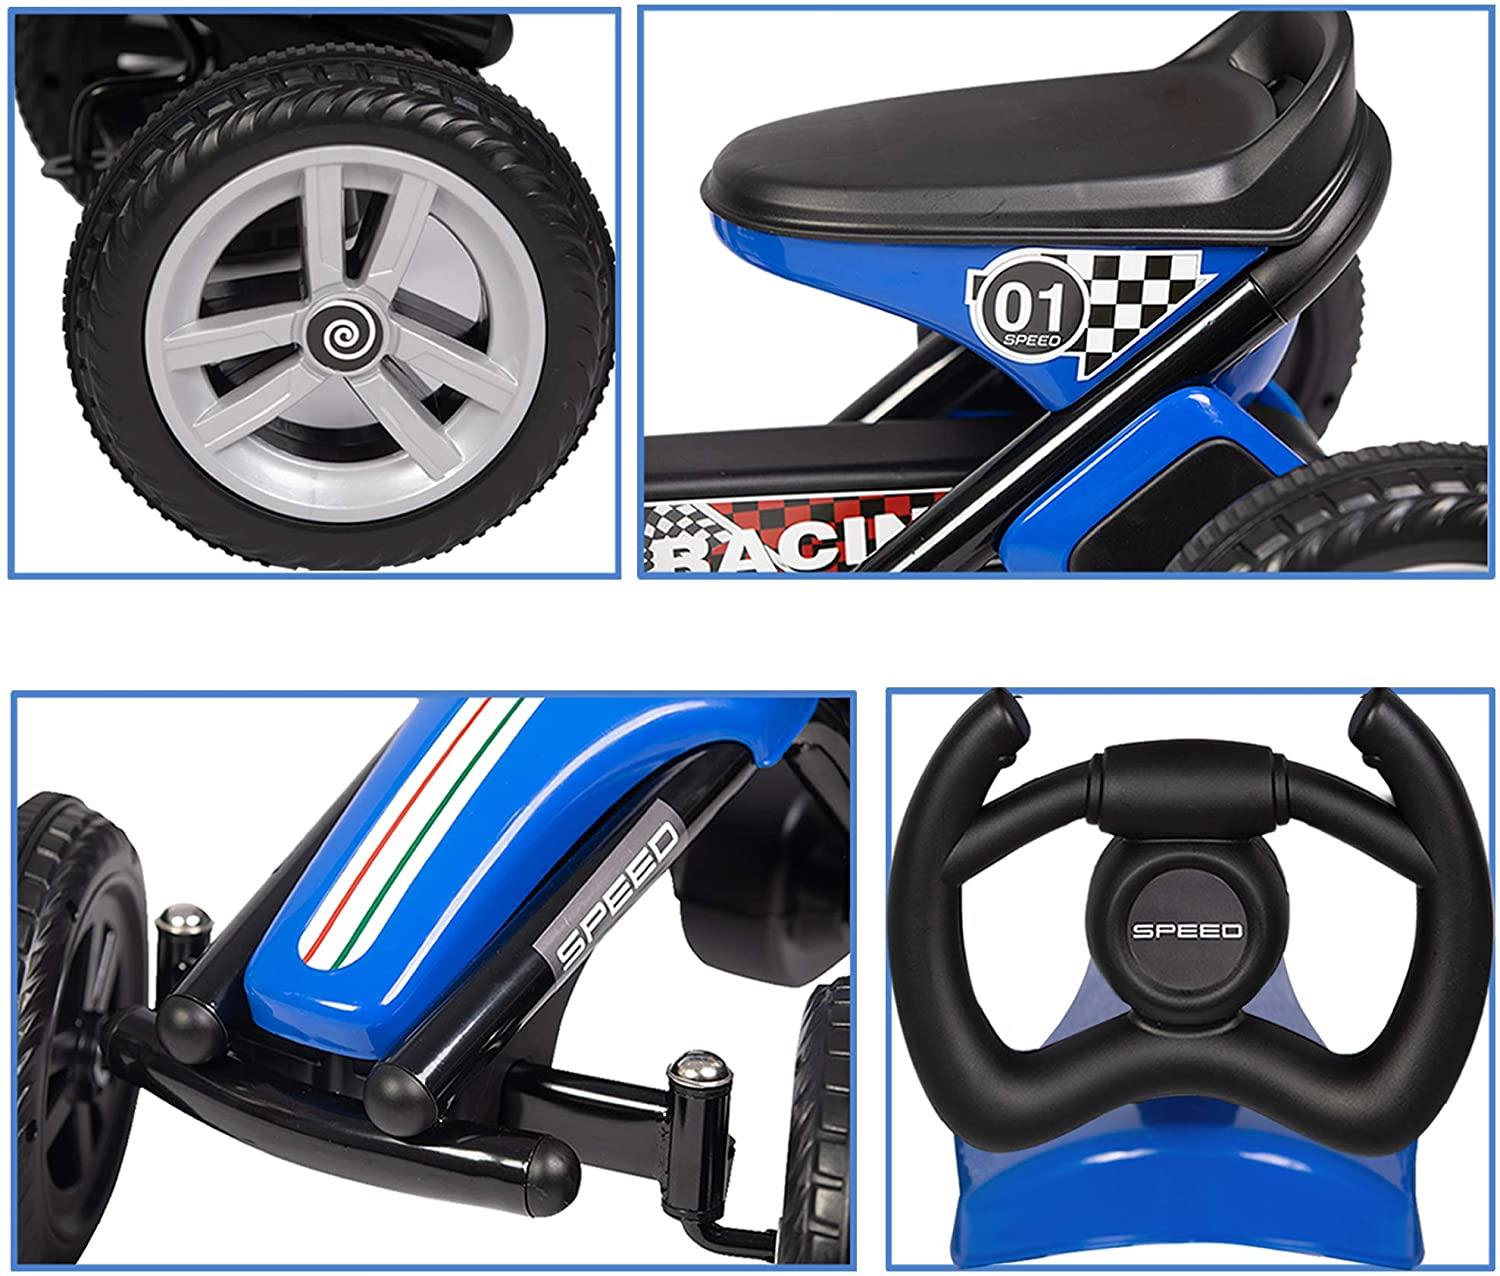 Pedal Go Kart Ride on Toys 4 Wheel Kids' Pedal Car Racer with EVA Rubber Tires for Outdoor for Boys & Girls - Bosonshop